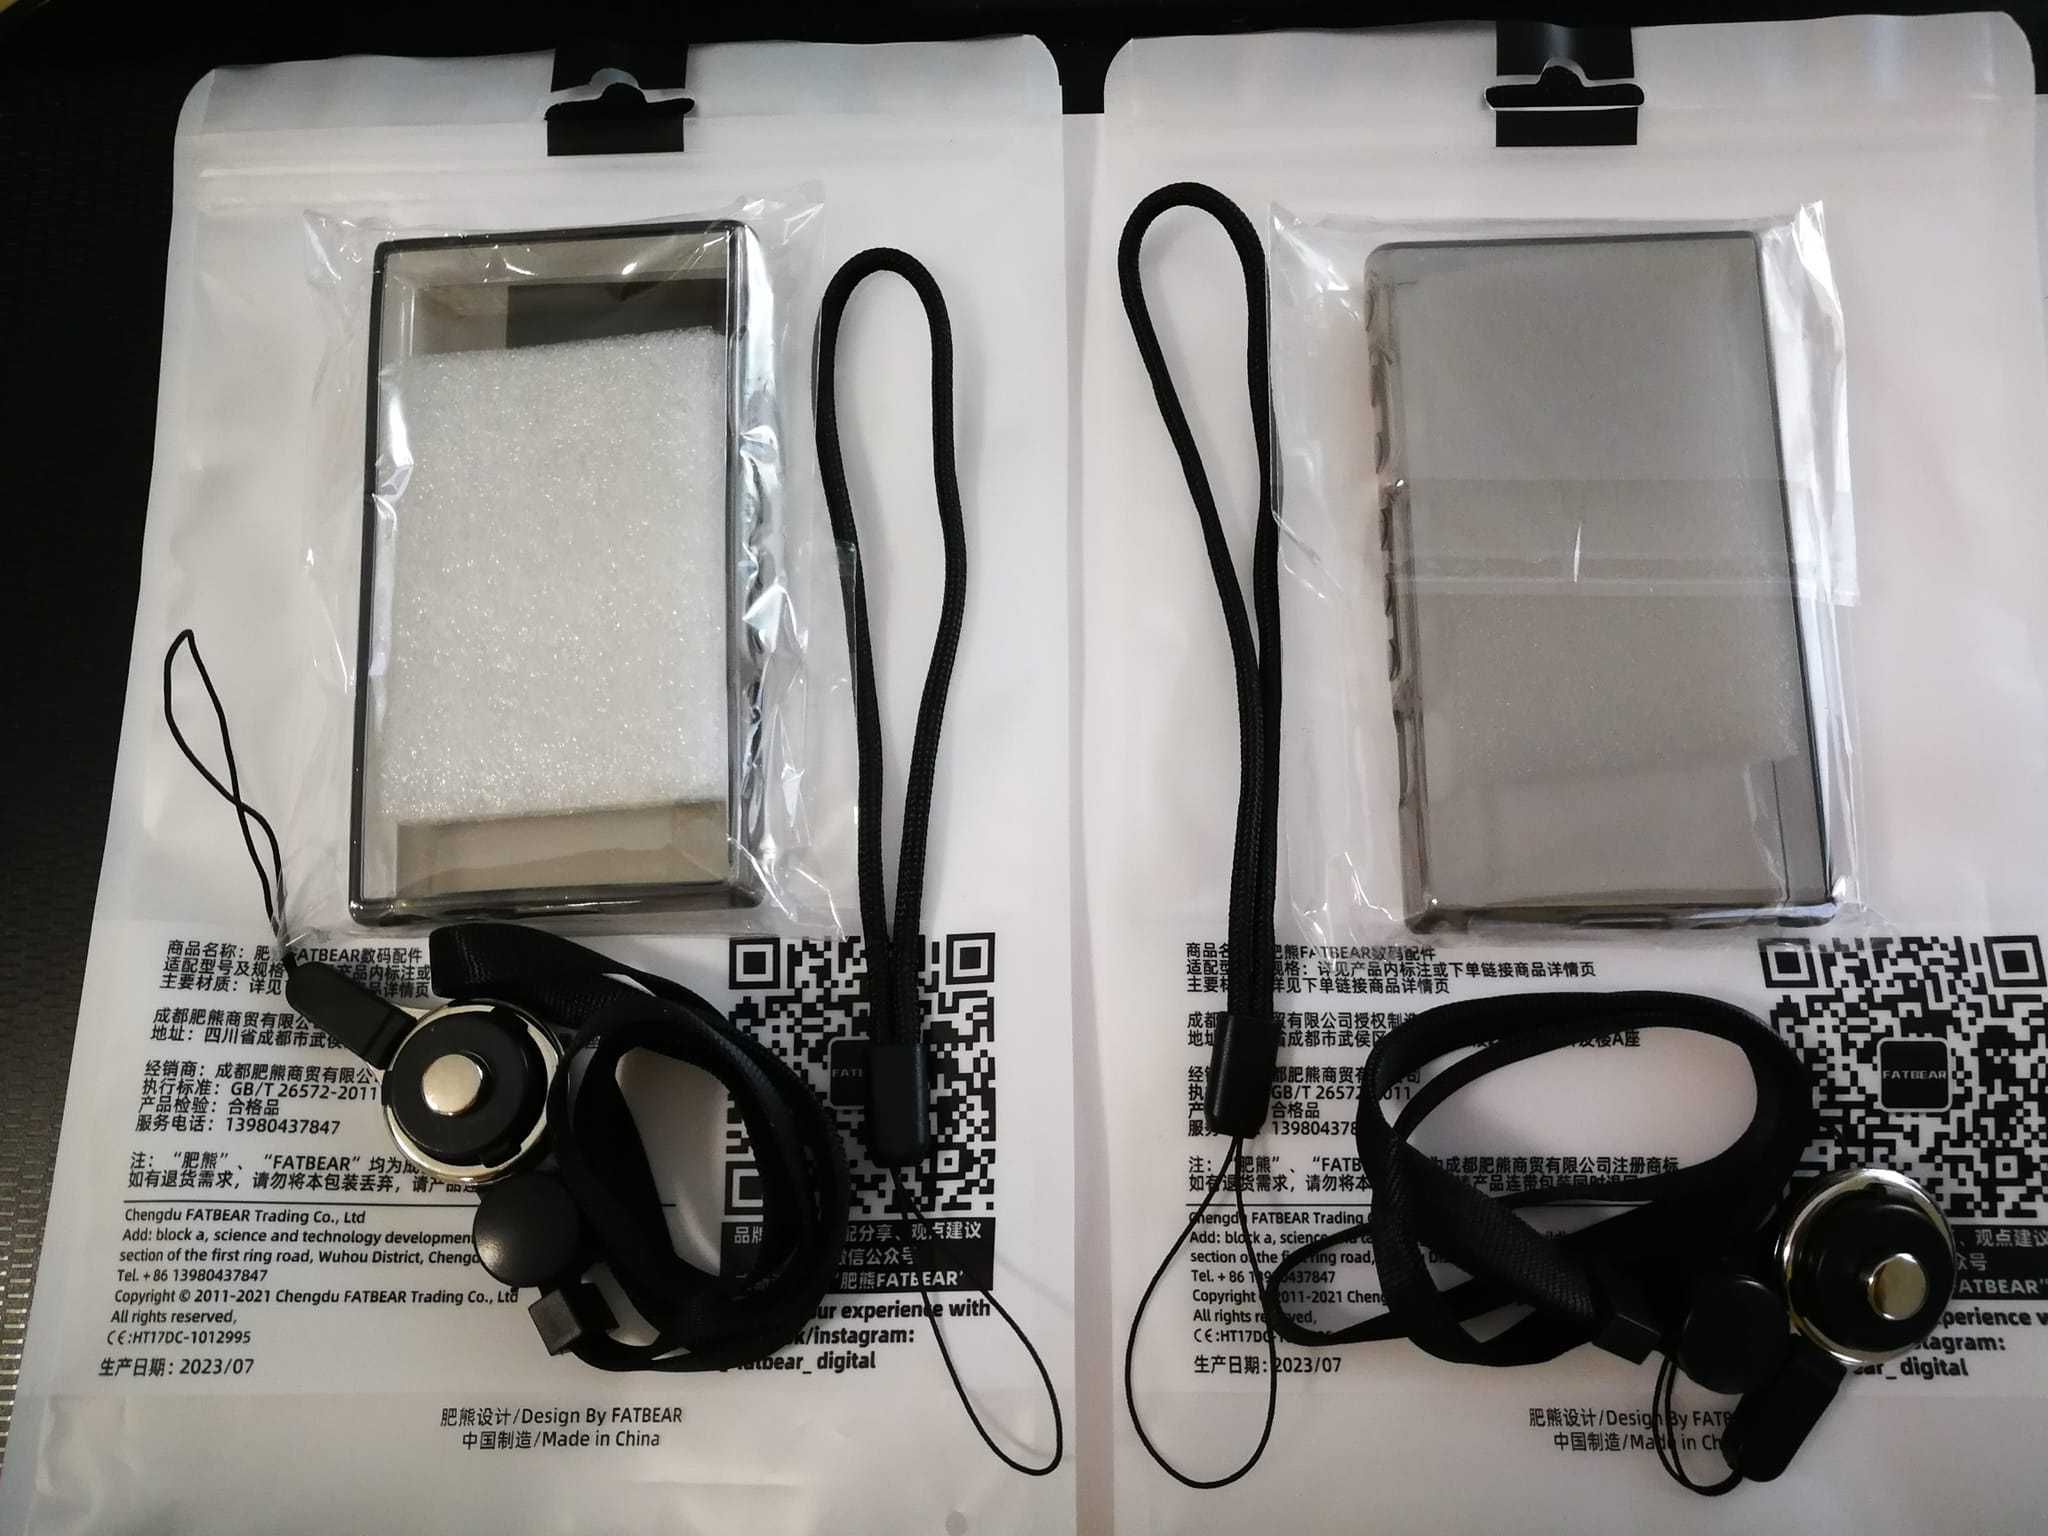 SONY Walkman NW-A105, capa protectora em silicone clear black nova